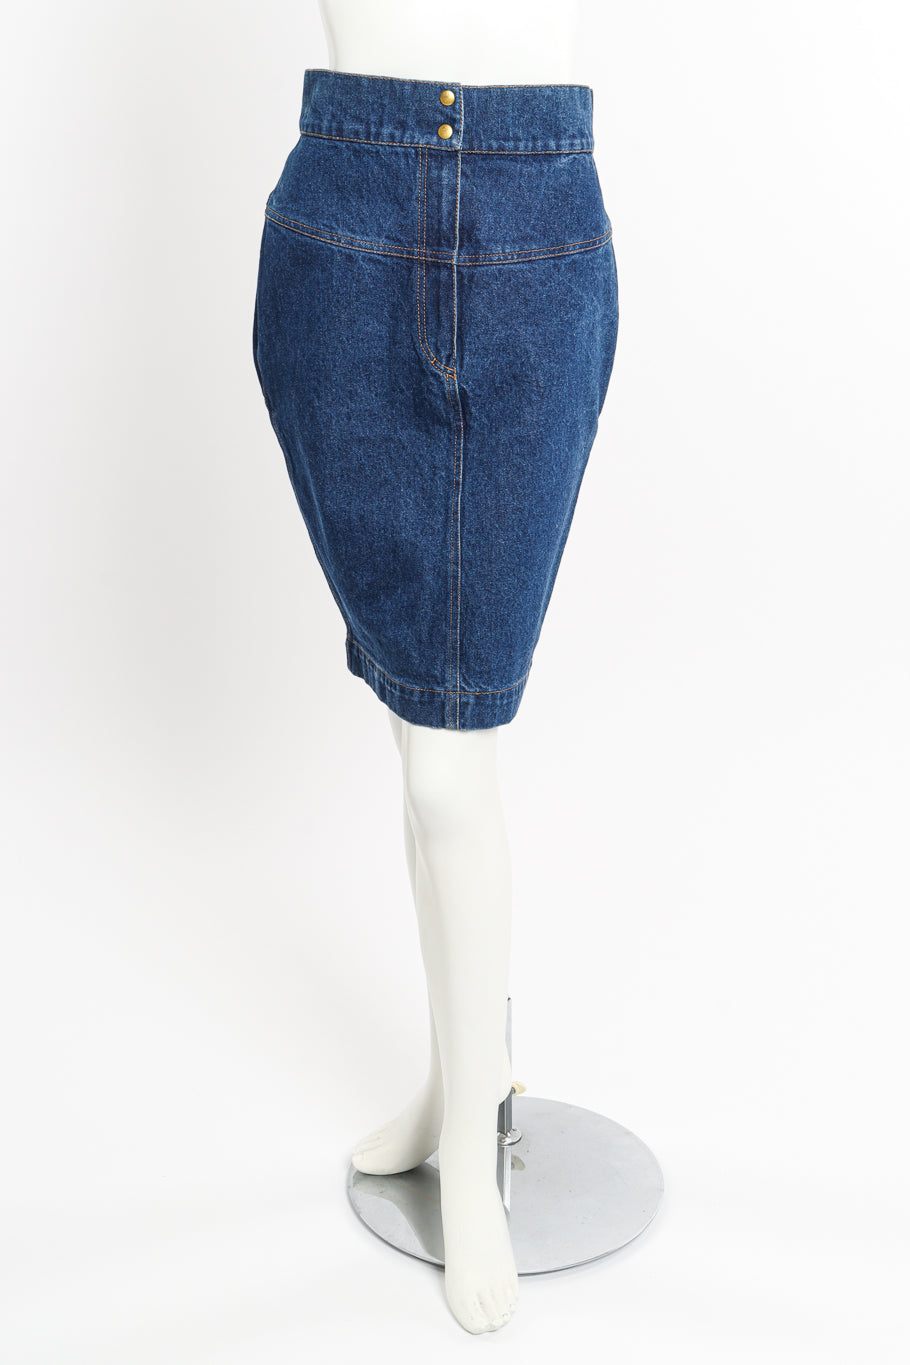 Vintage Alaia Denim Pencil Skirt front on mannequin @recessla